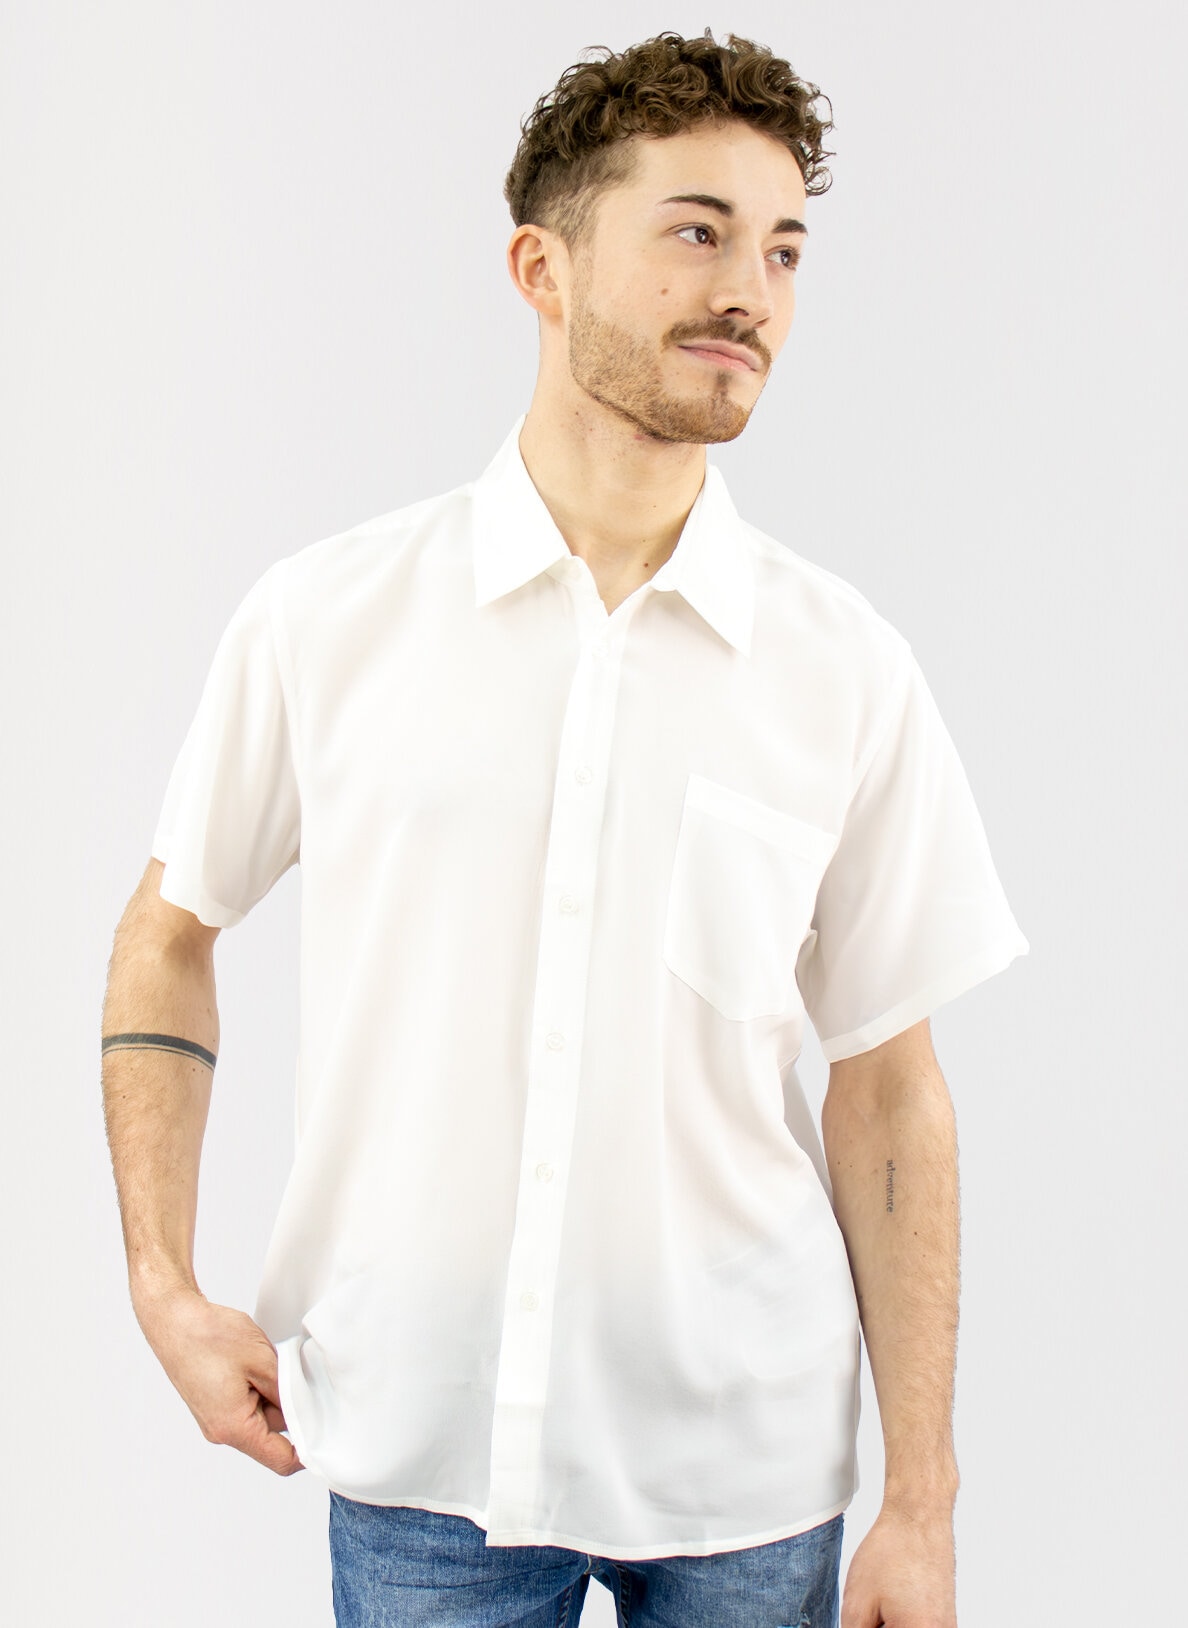 Men's silk shirt white